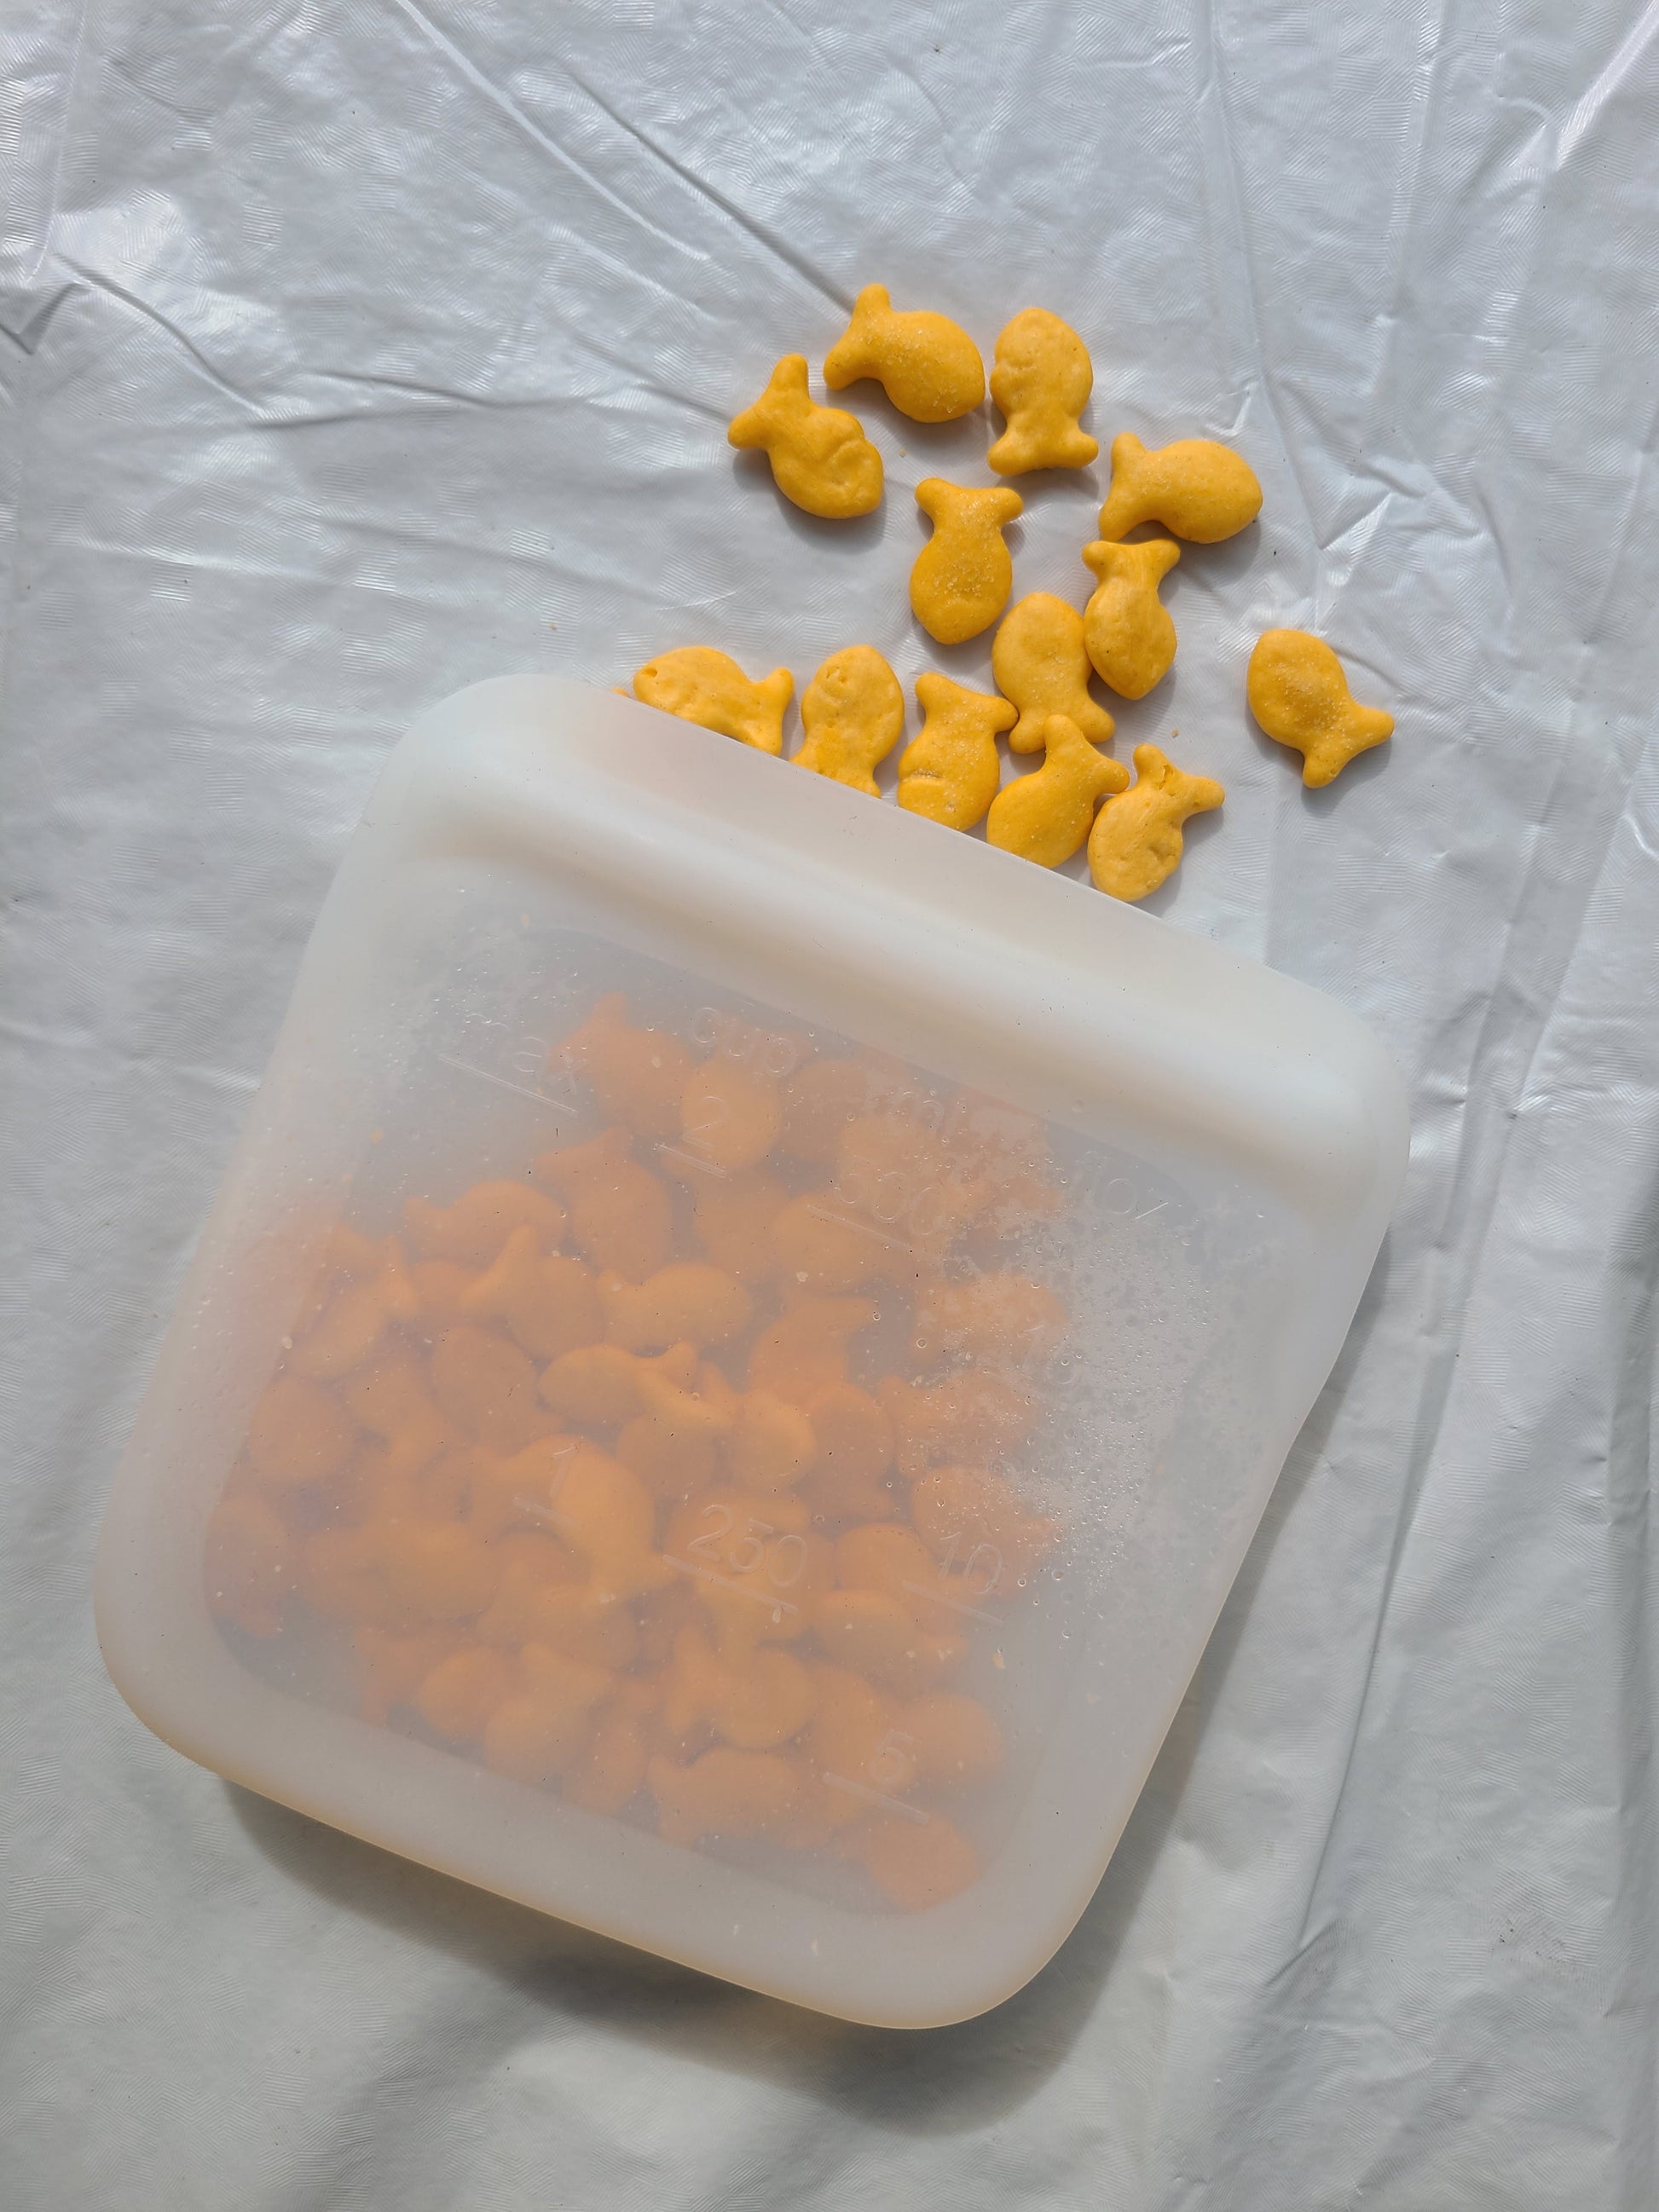 Food grade plastic ecosense reusable silicone bags